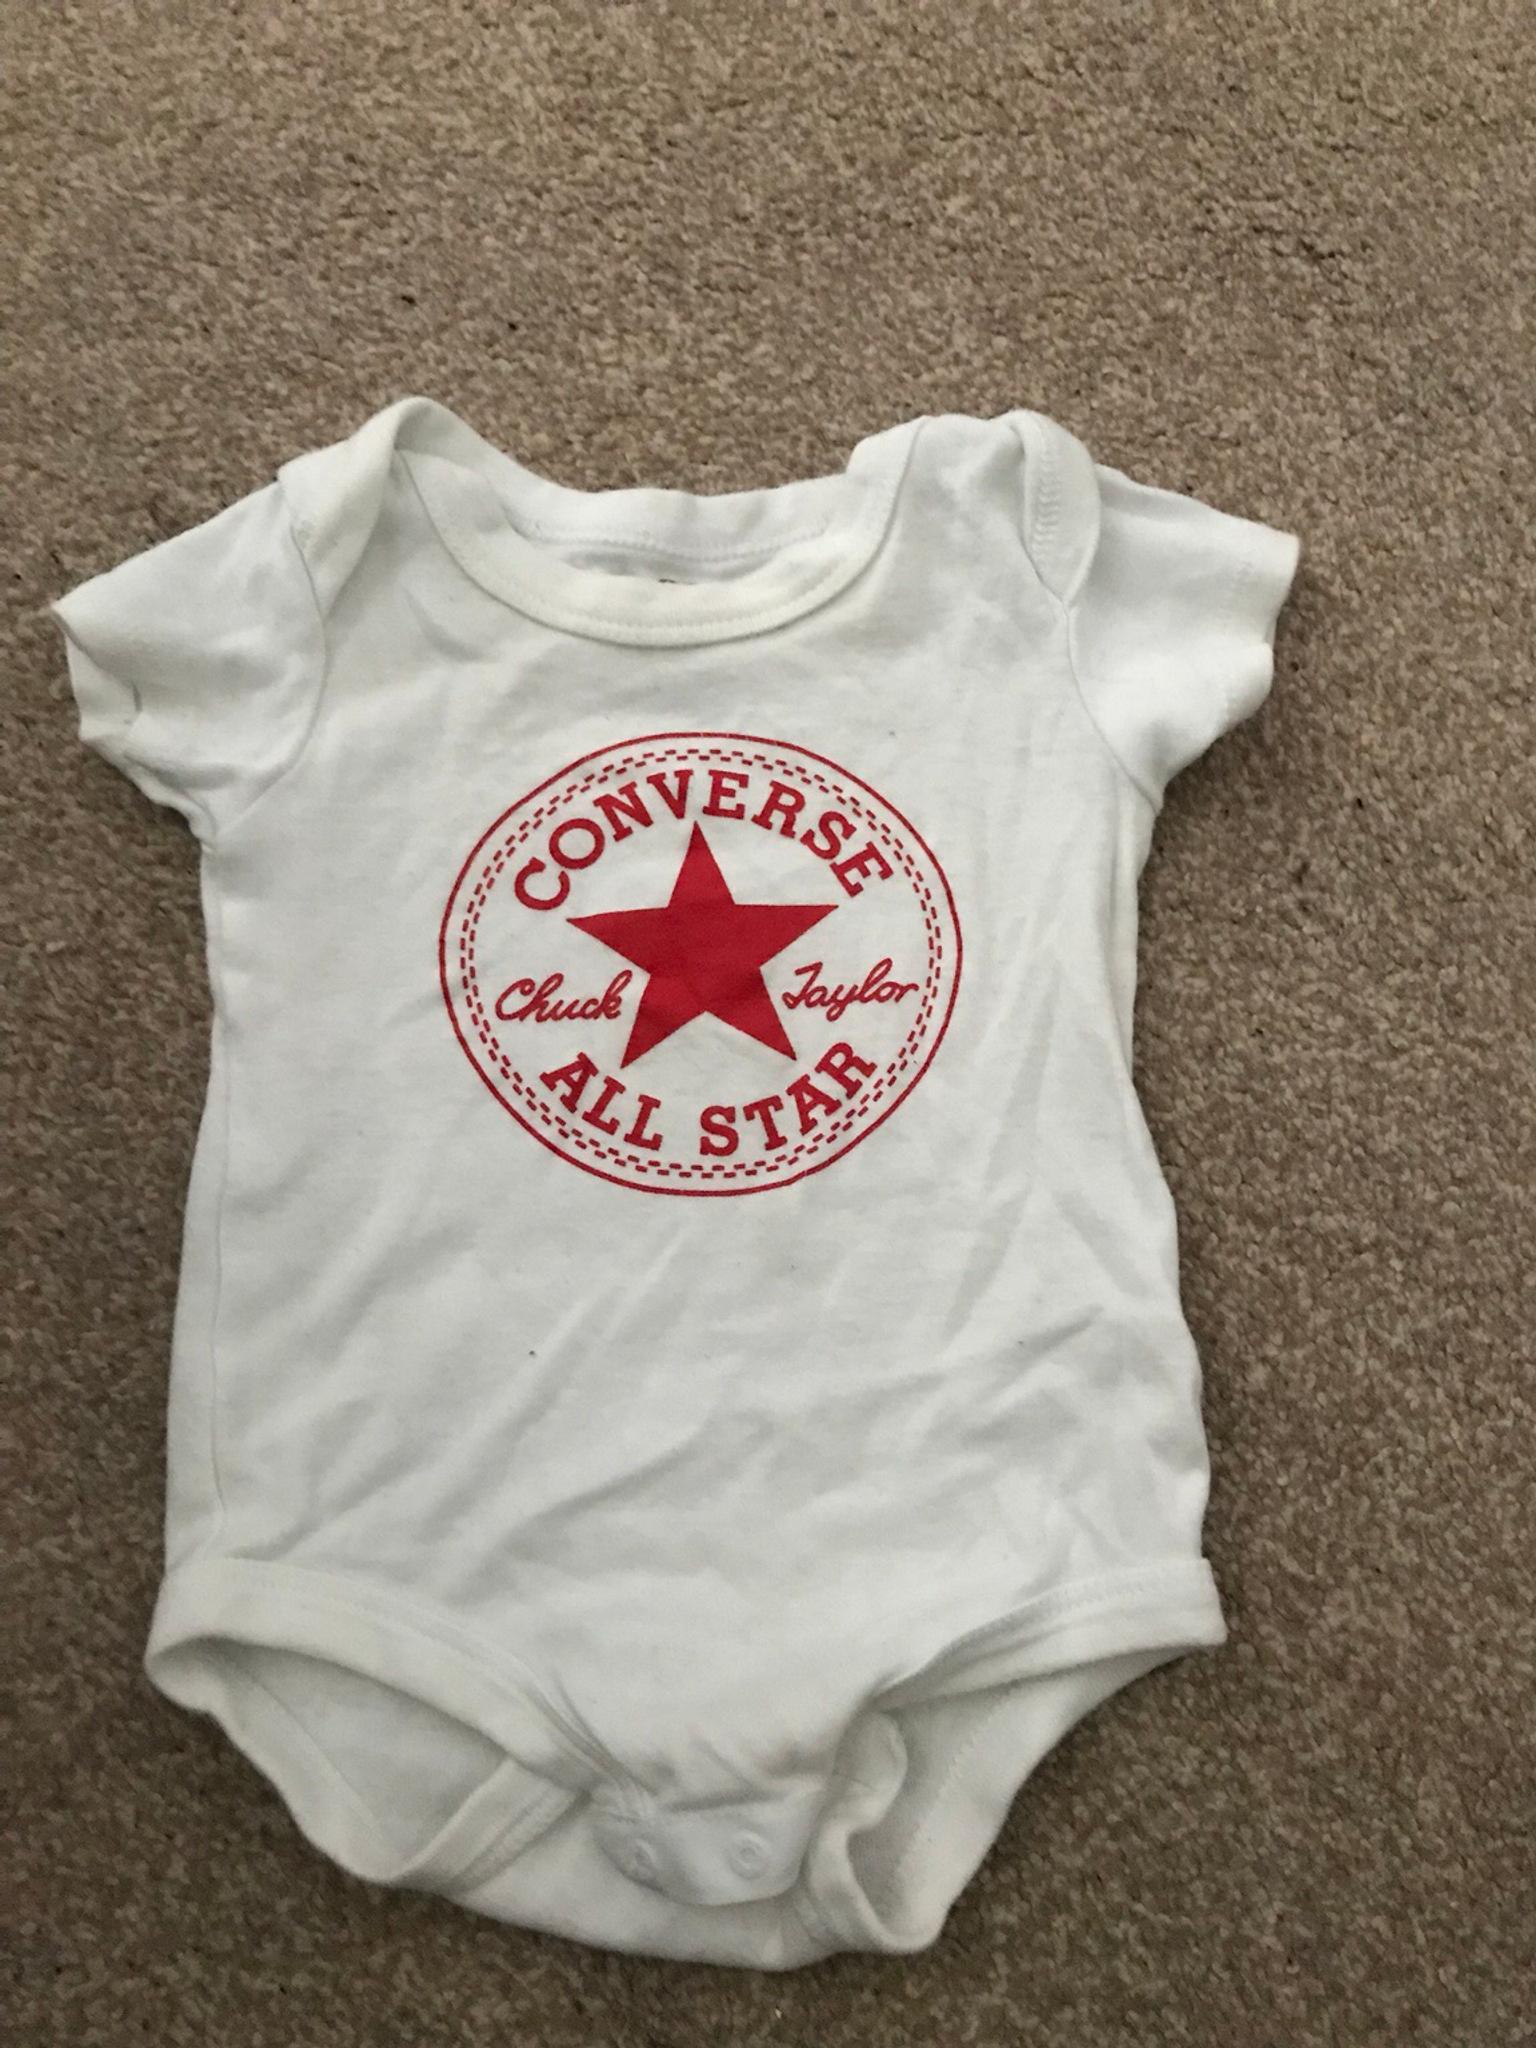 converse baby grow